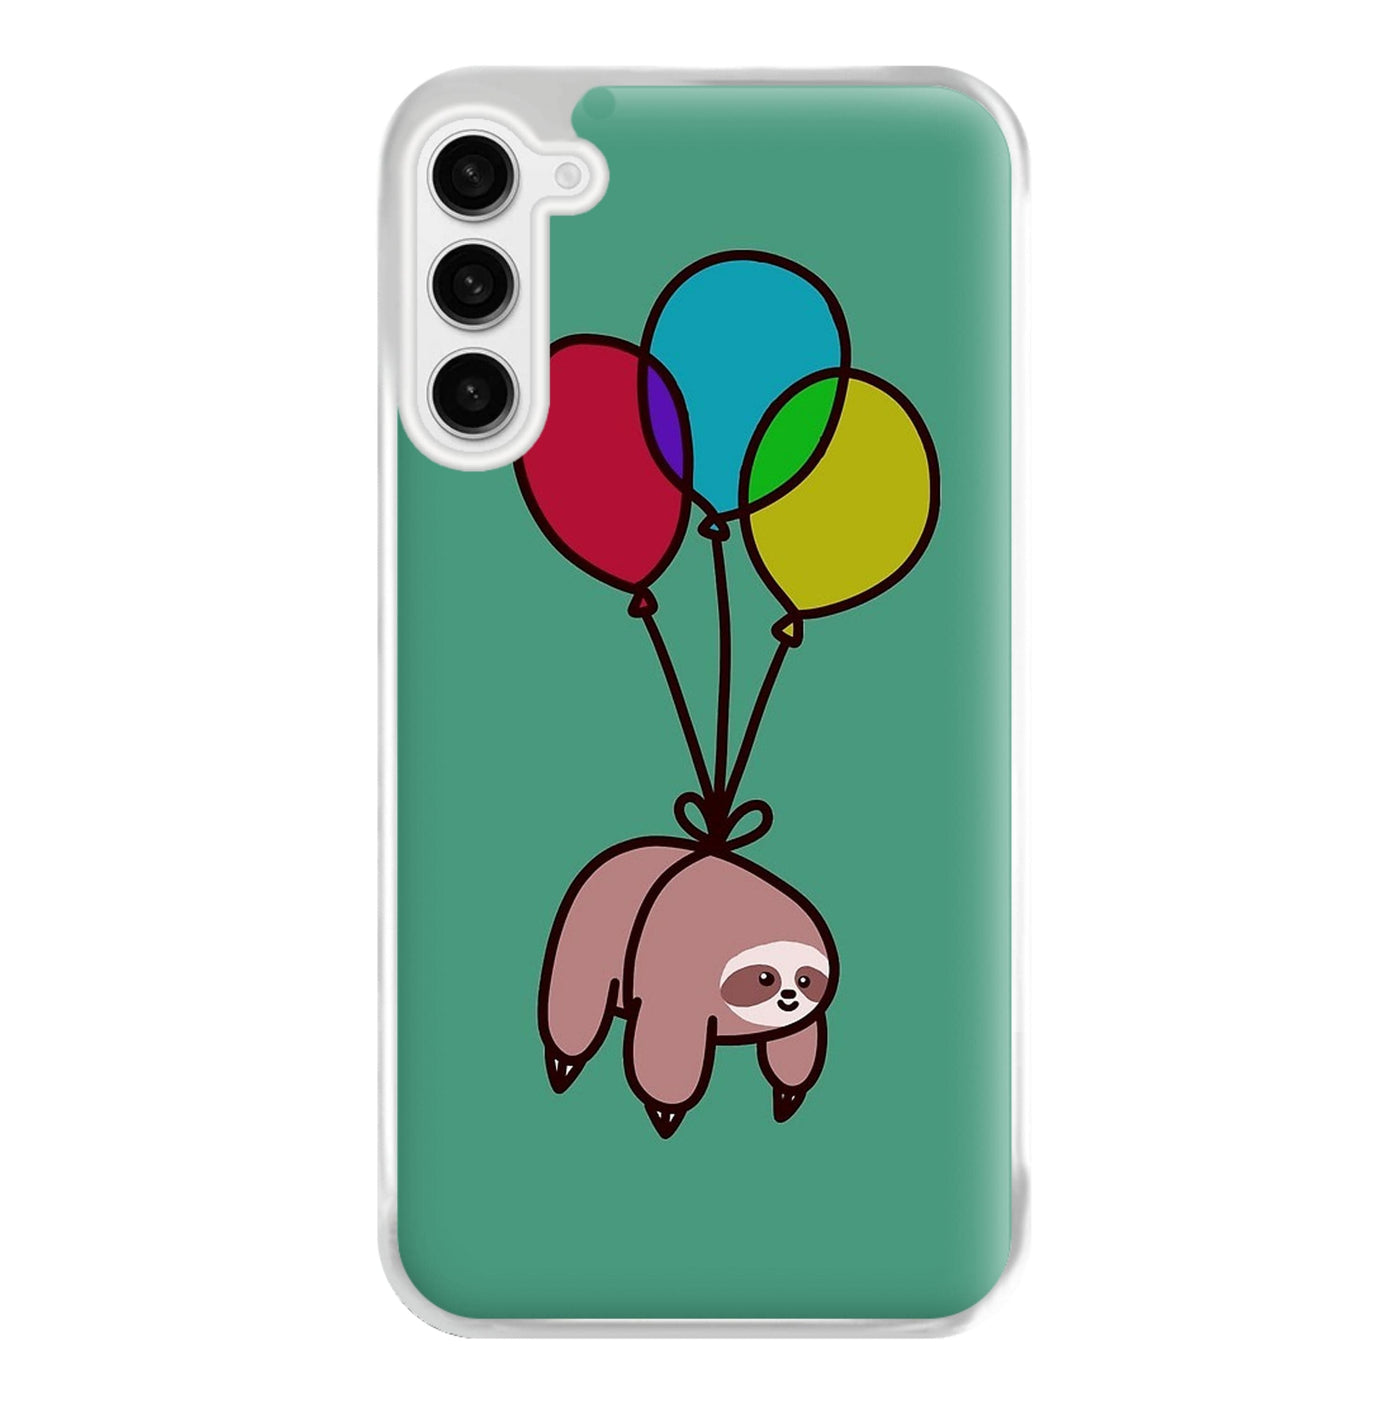 Balloon Sloth Phone Case